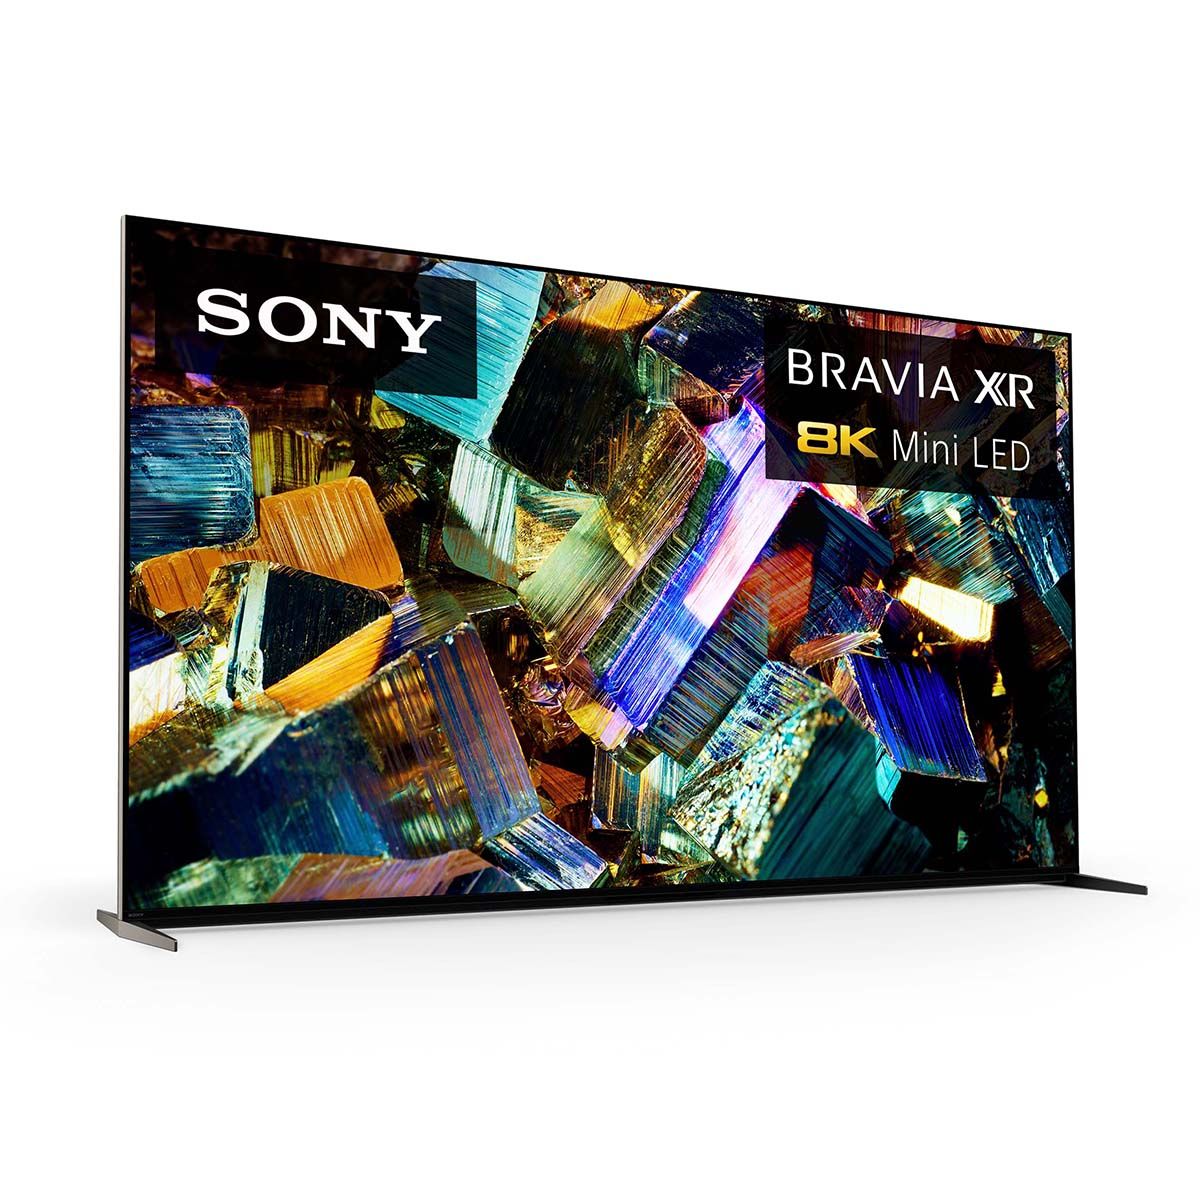 Sony BRAVIA XR Z9K 8K LED HDR Television, front angle